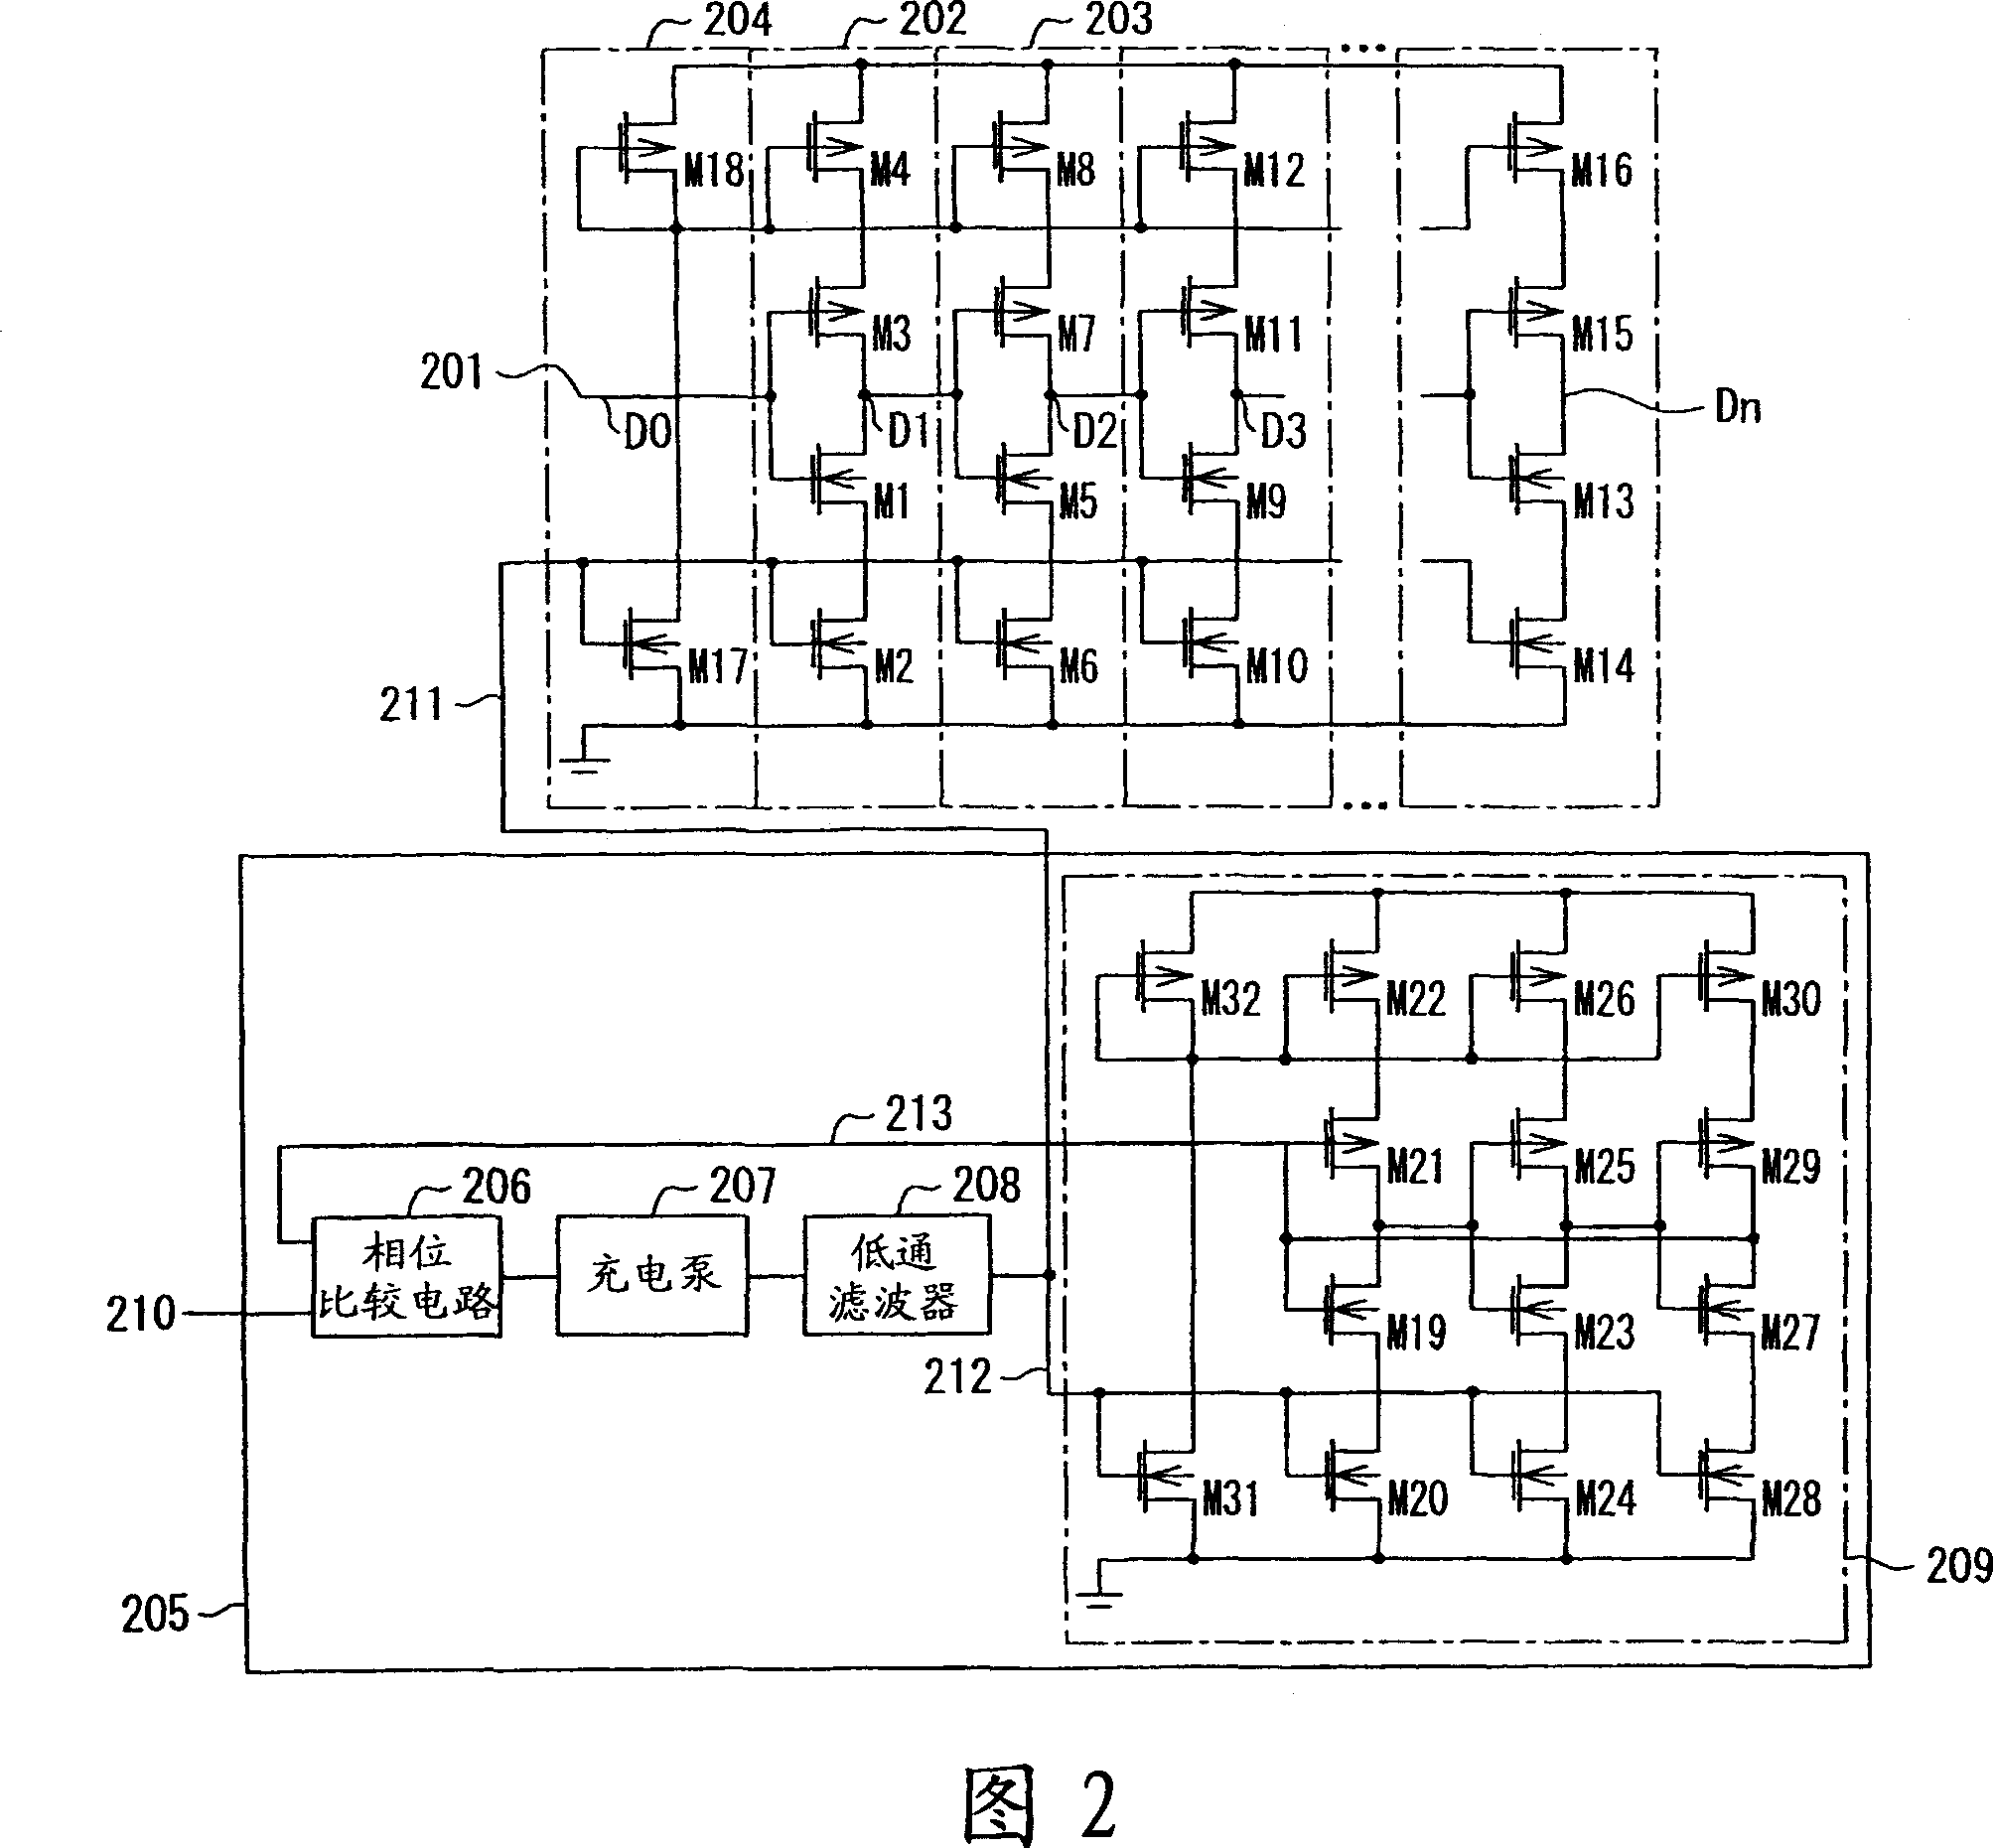 Pulse generating circuit, electronic device using this pulse generating circuit, and information transmitting method using this circuit